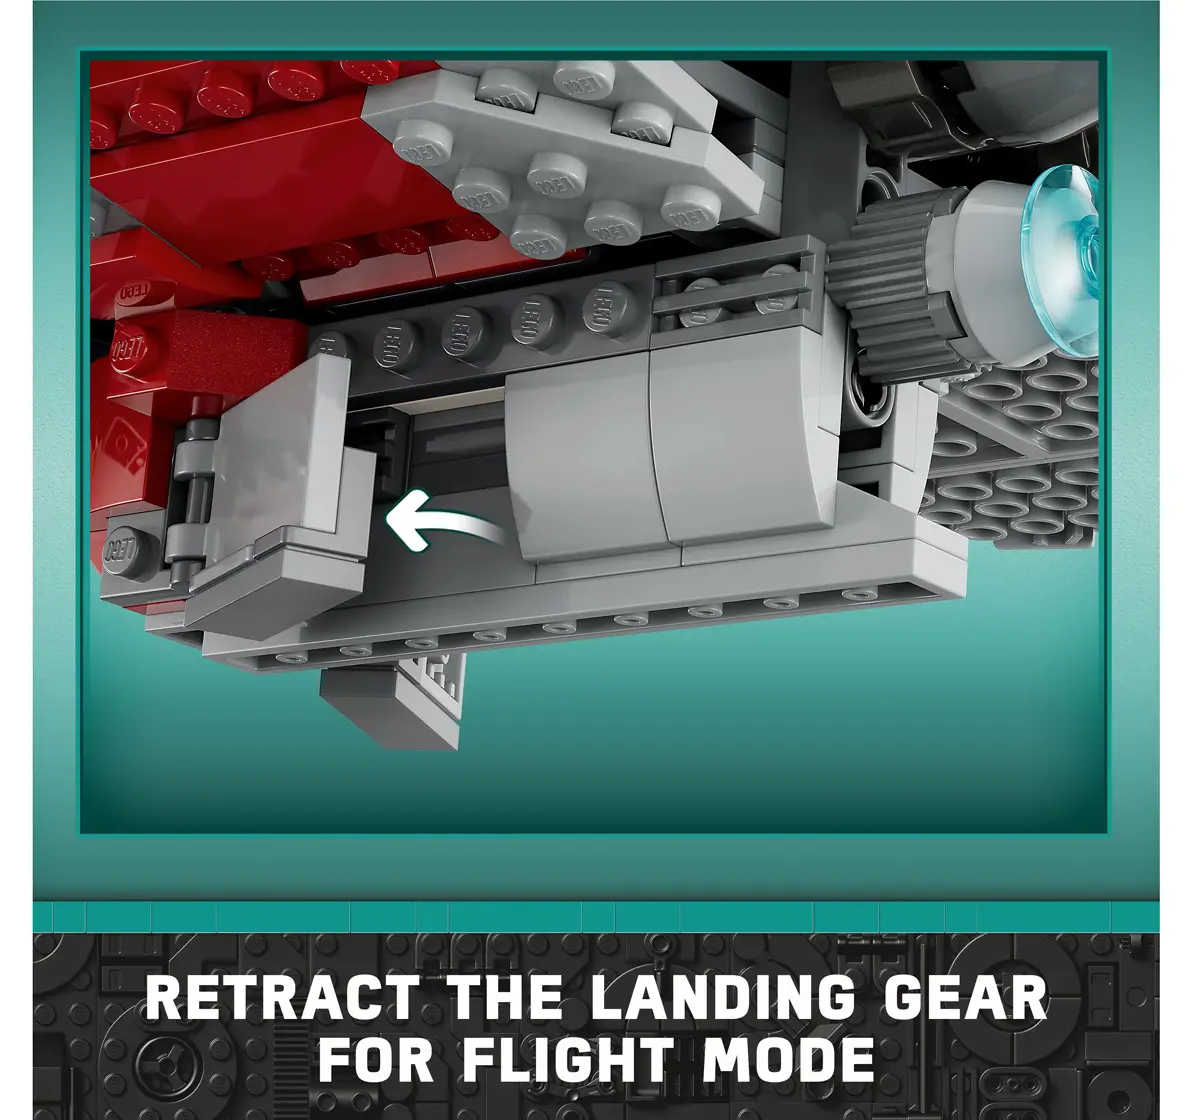 LEGO Star Wars Ahsoka Tanos T-6 Jedi Shuttle 75362 Building Toy Set (601 Pieces)